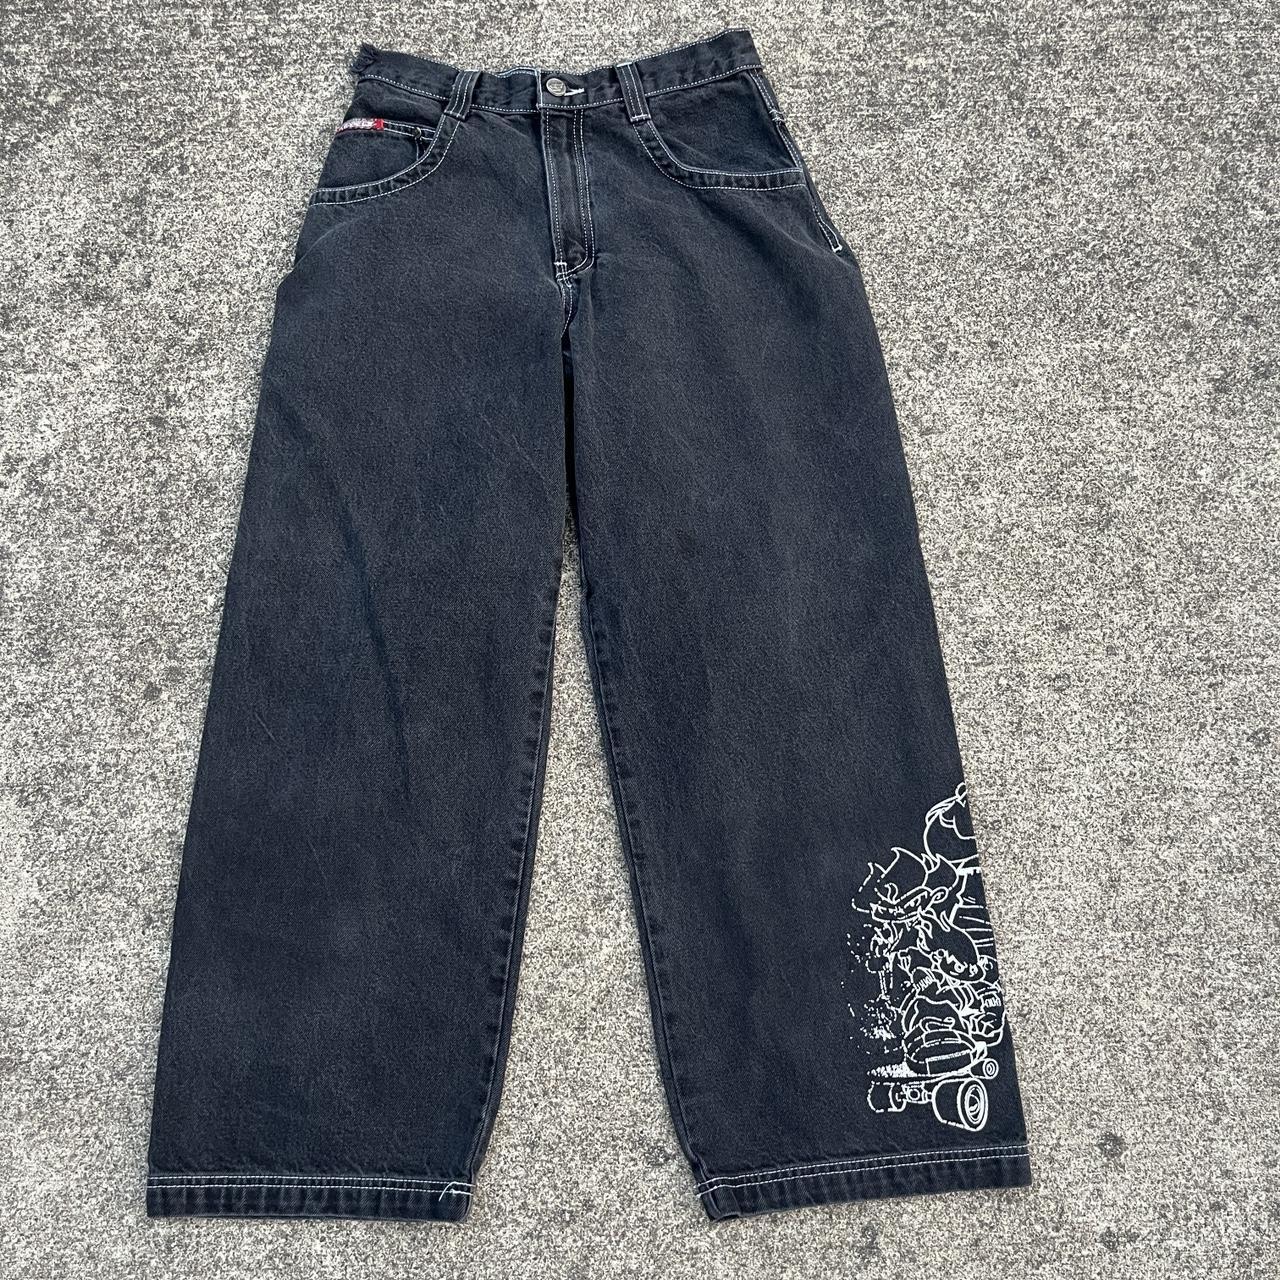 Vintage Flamehead JNCO Tribal Jeans 28x30, fits... - Depop